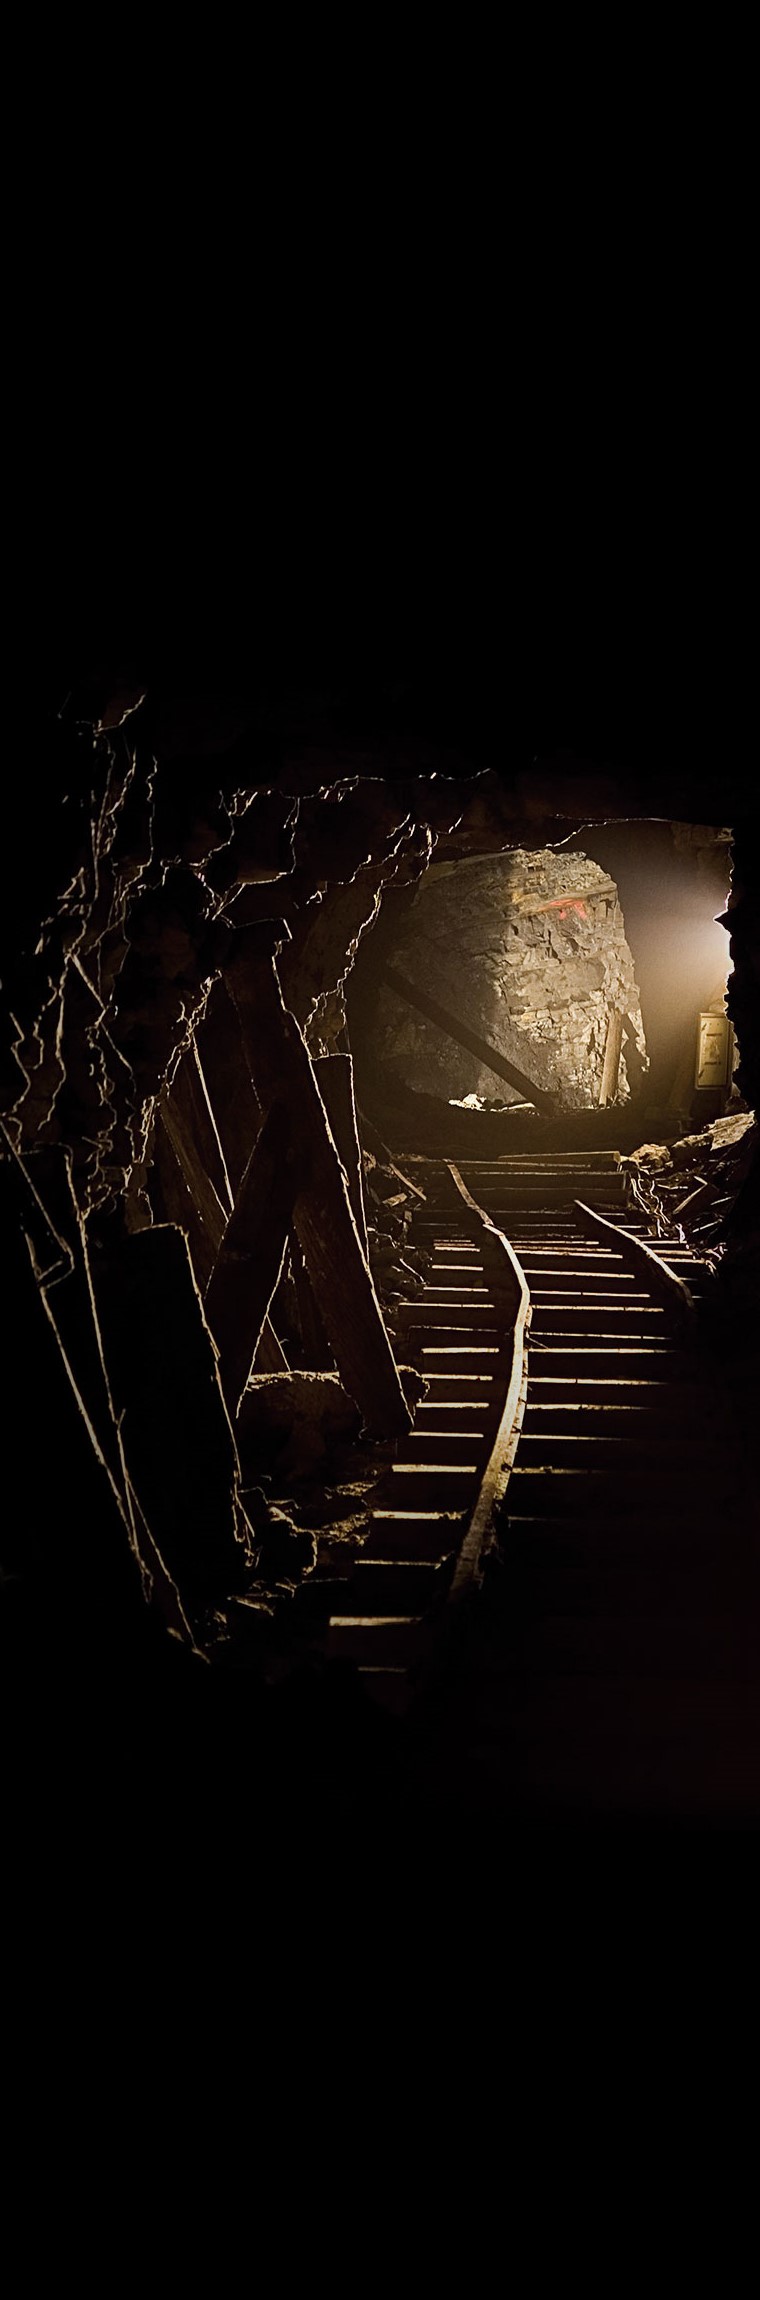 Jersey War Tunnels Image